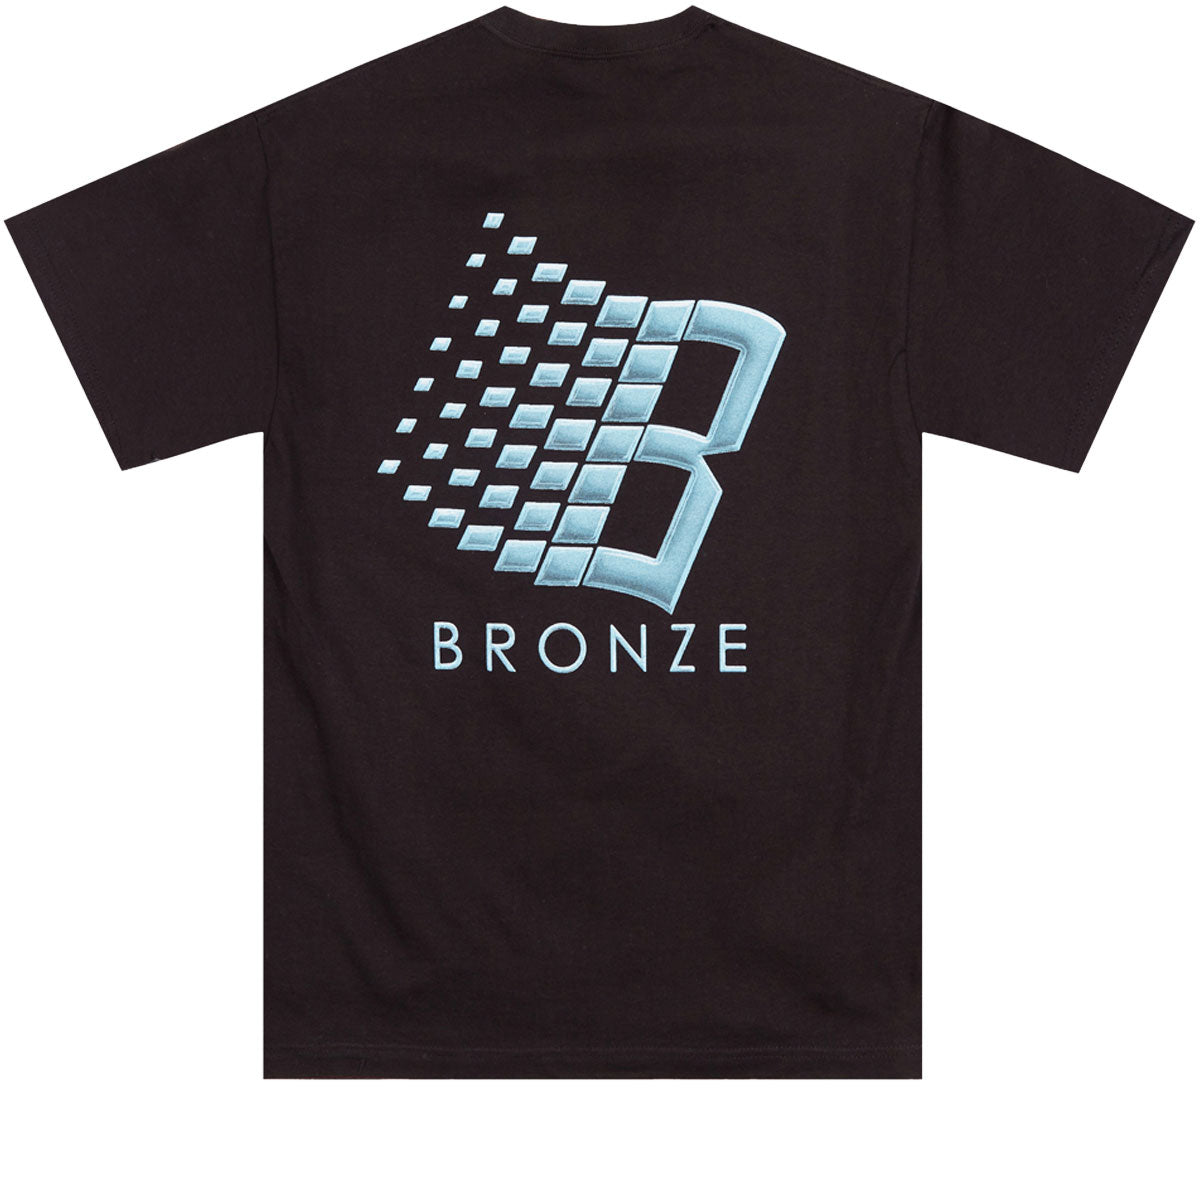 Bronze 56k Balloon Logo T-Shirt - Black image 1